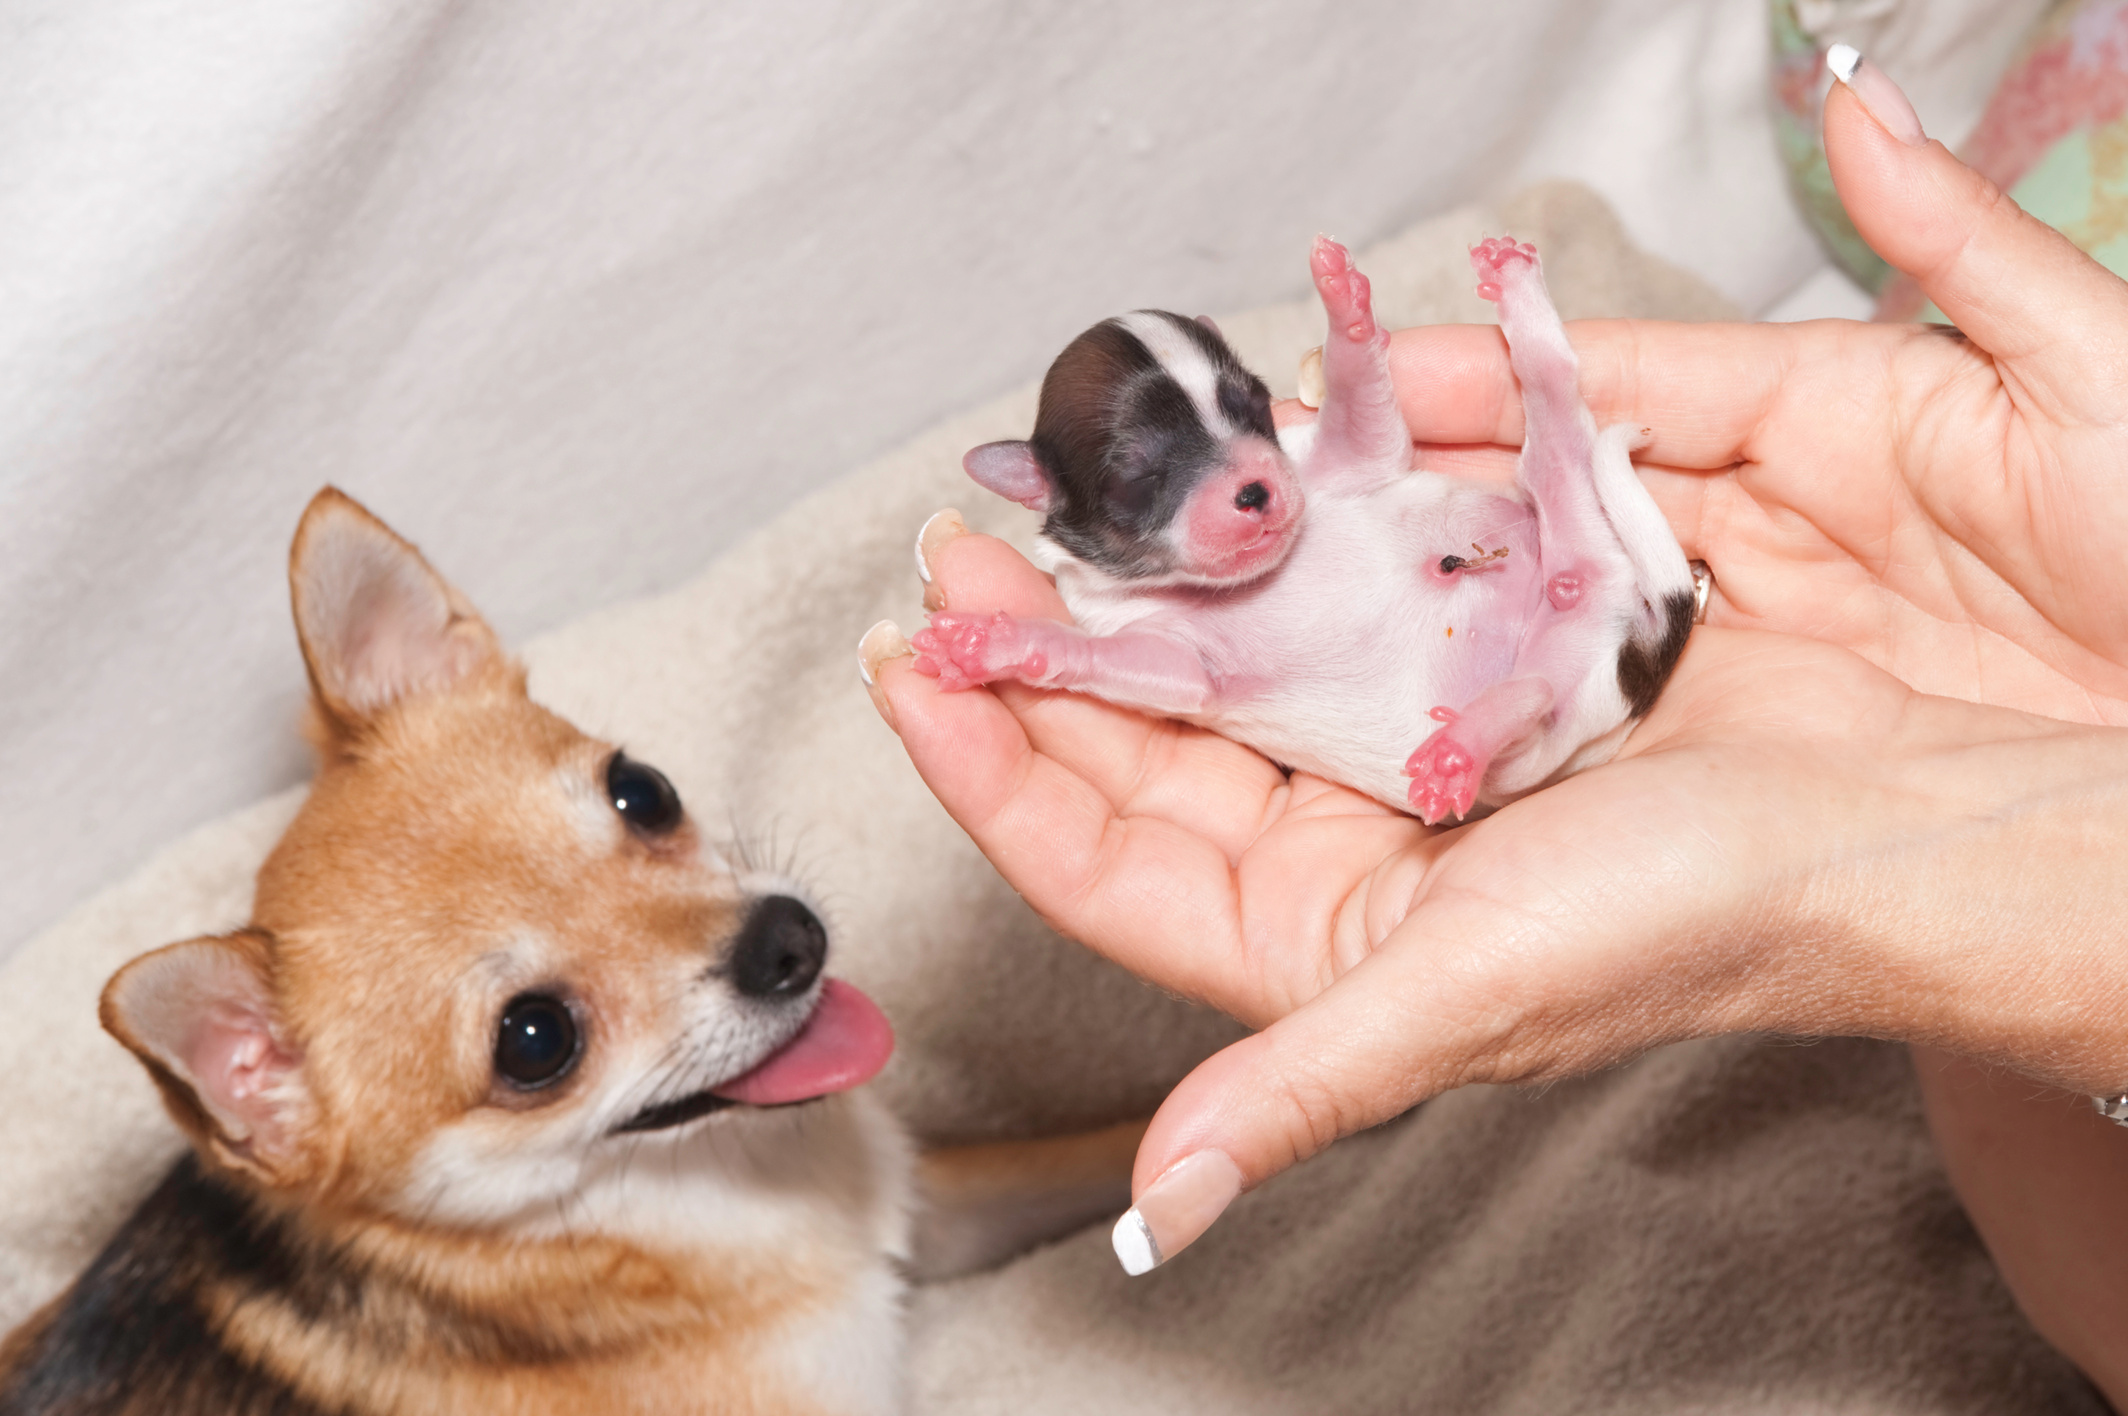 Dog birth